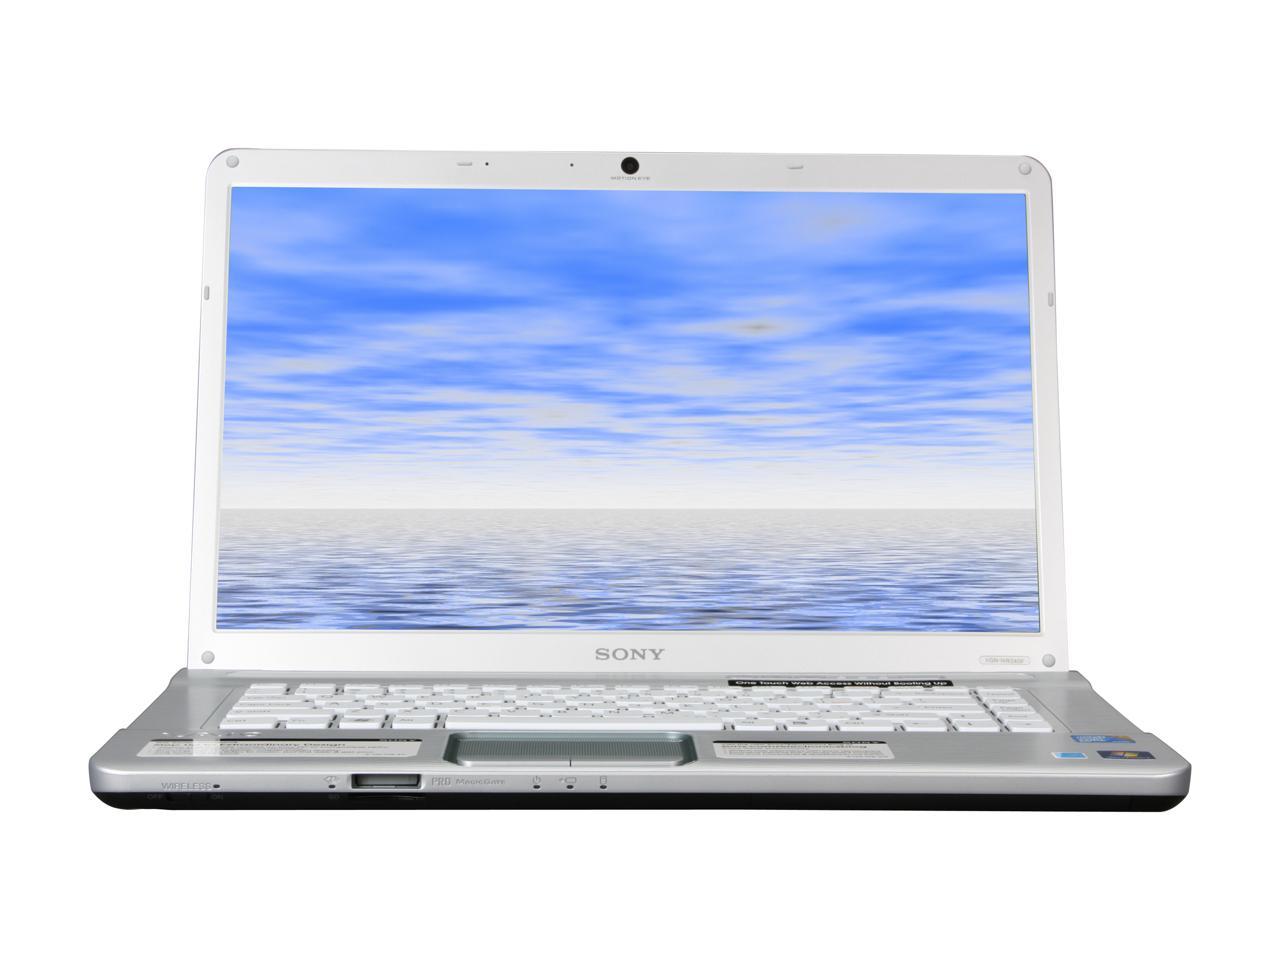 Sony Laptop Vaio Nw Series Intel Core Duo T Gb Memory Gb Hdd Intel Gma Mhd